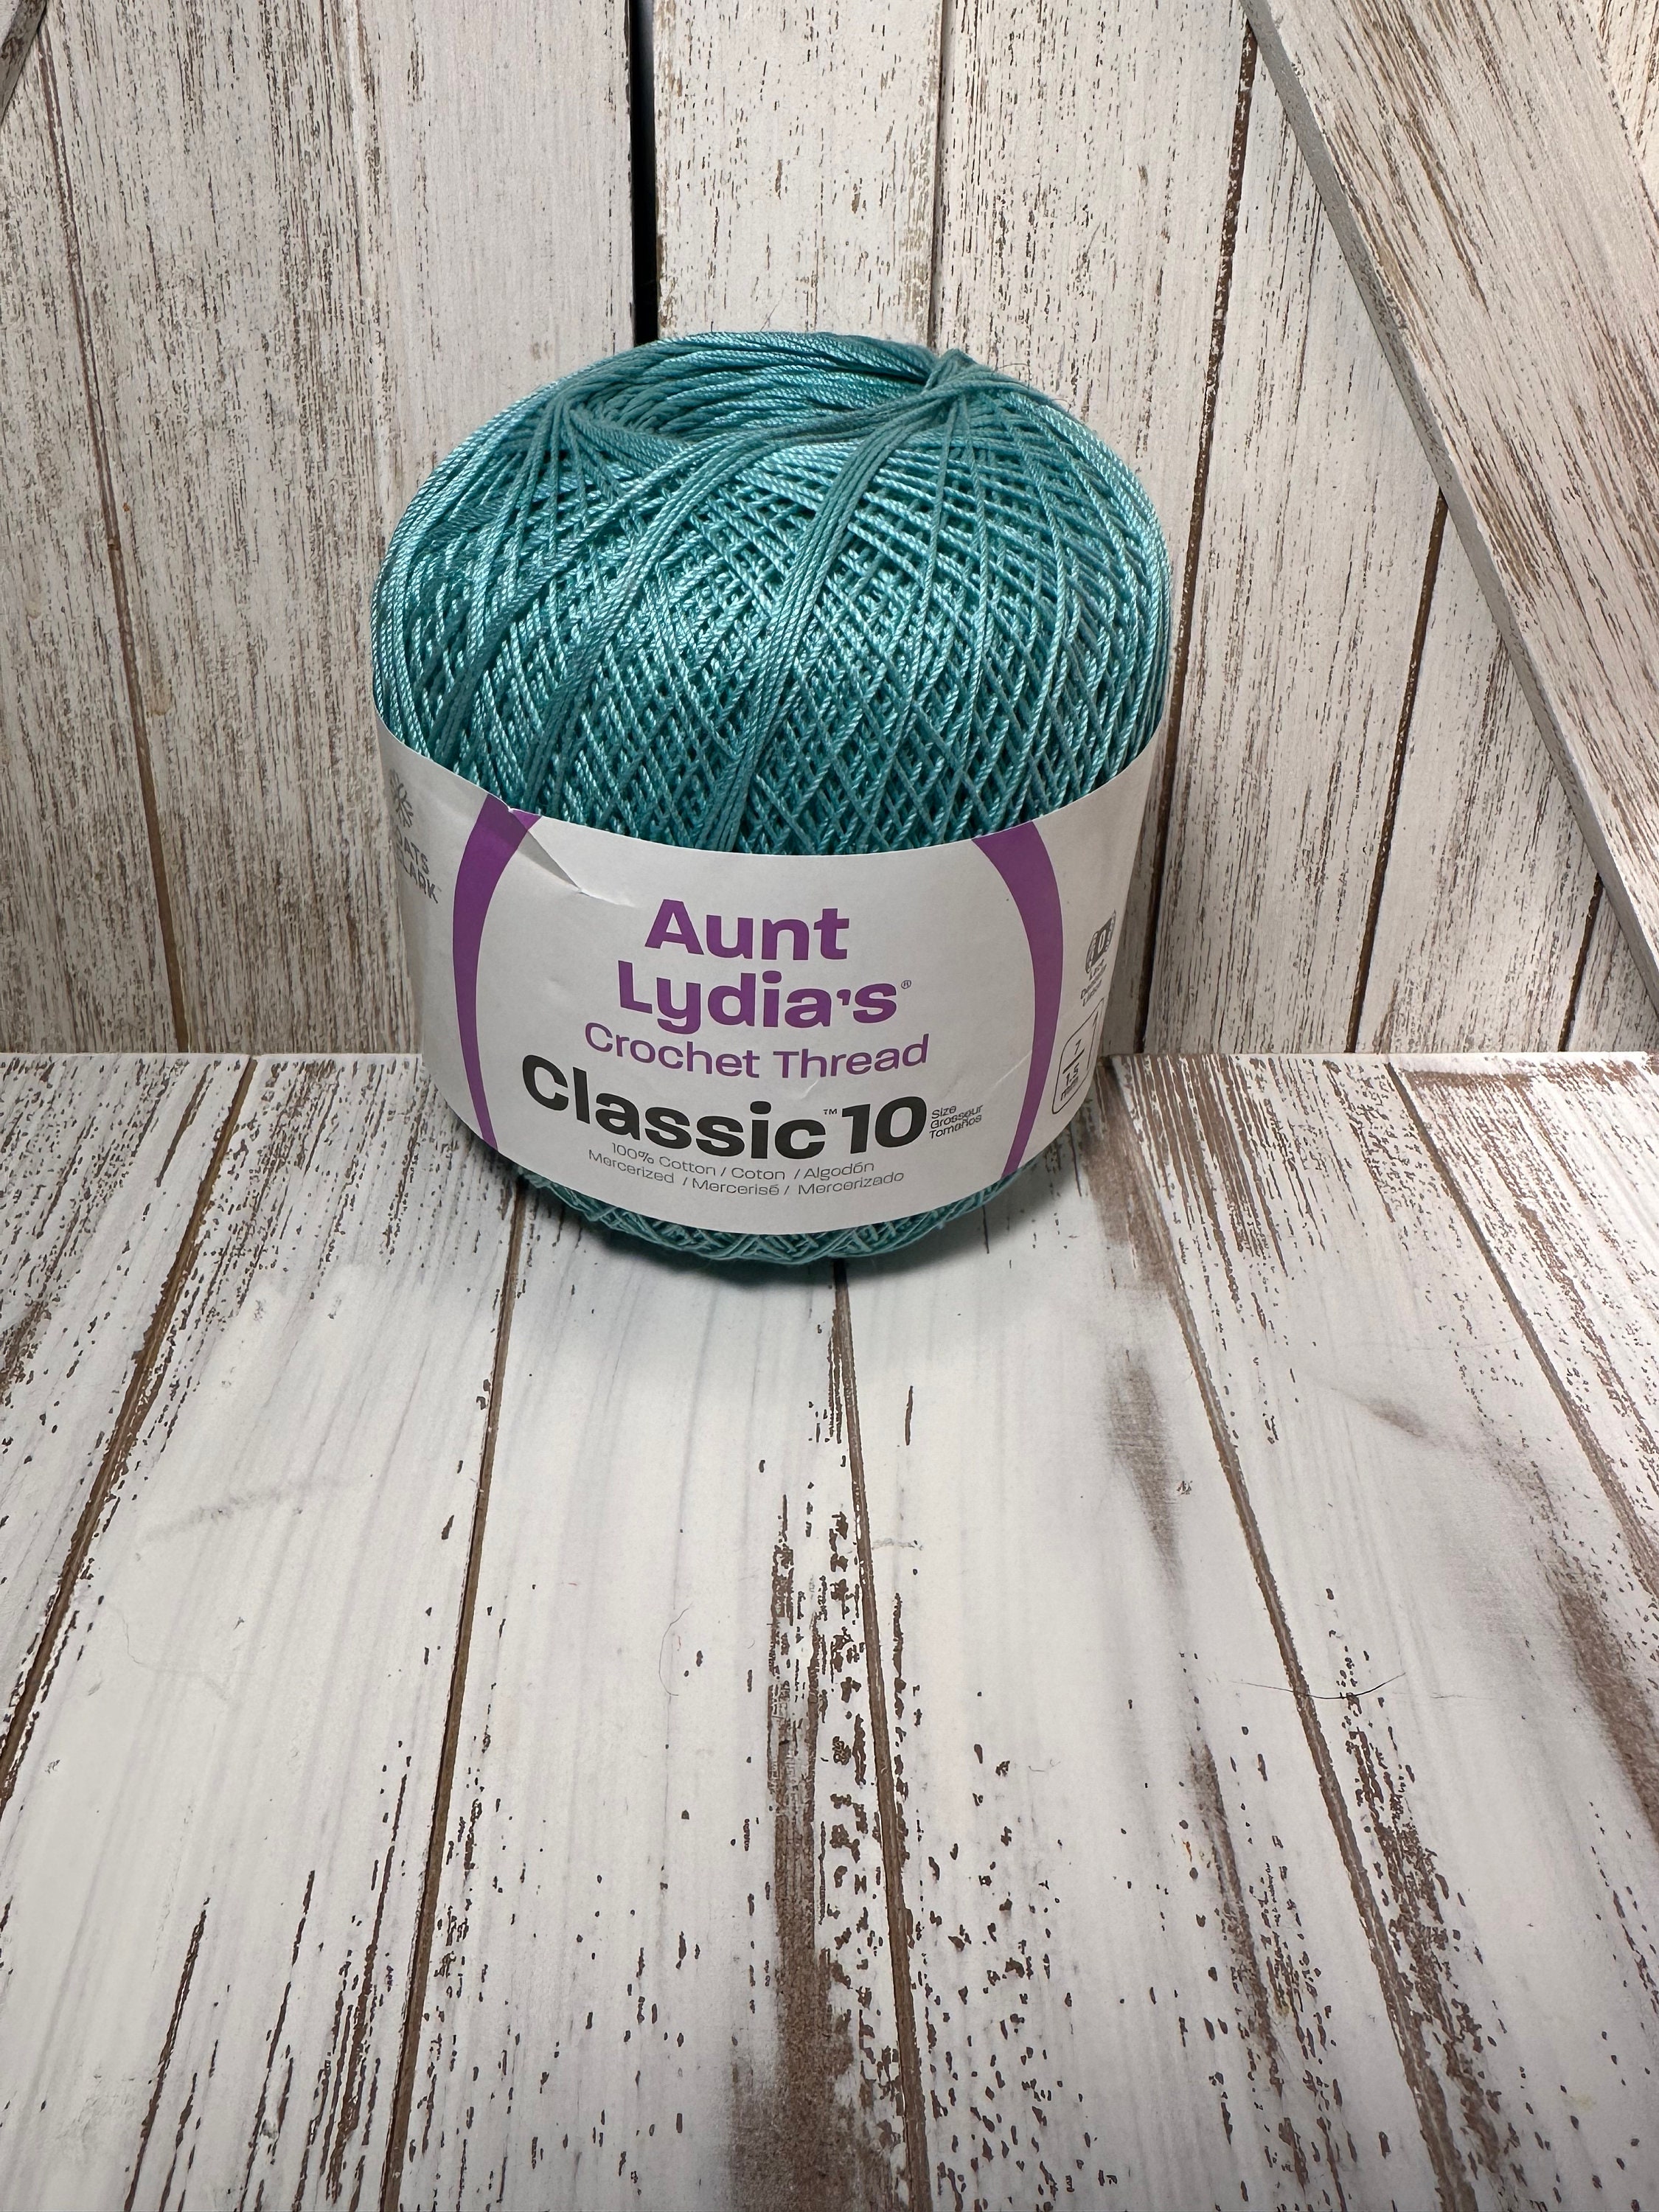 Aunt Lydia's Fashion Crochet Size 3 in Copper Mist Color 